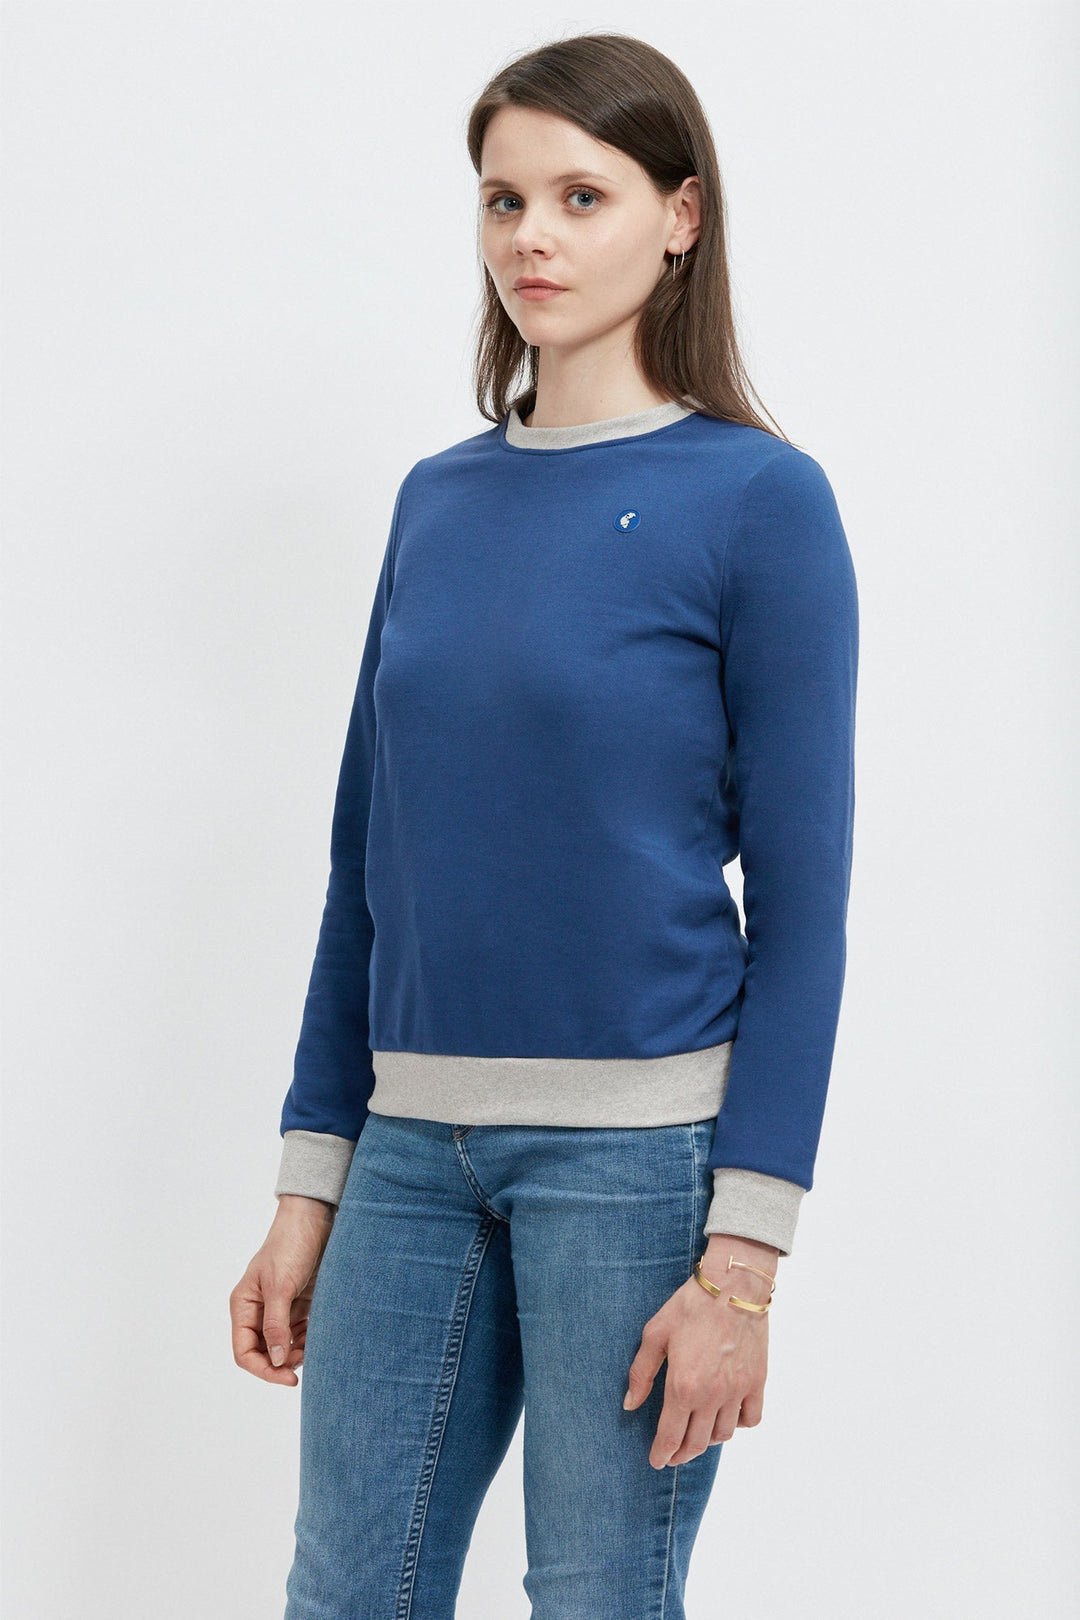 Sweatshirt coton upcyclé - Bi-Ton - Bleu - fairytale